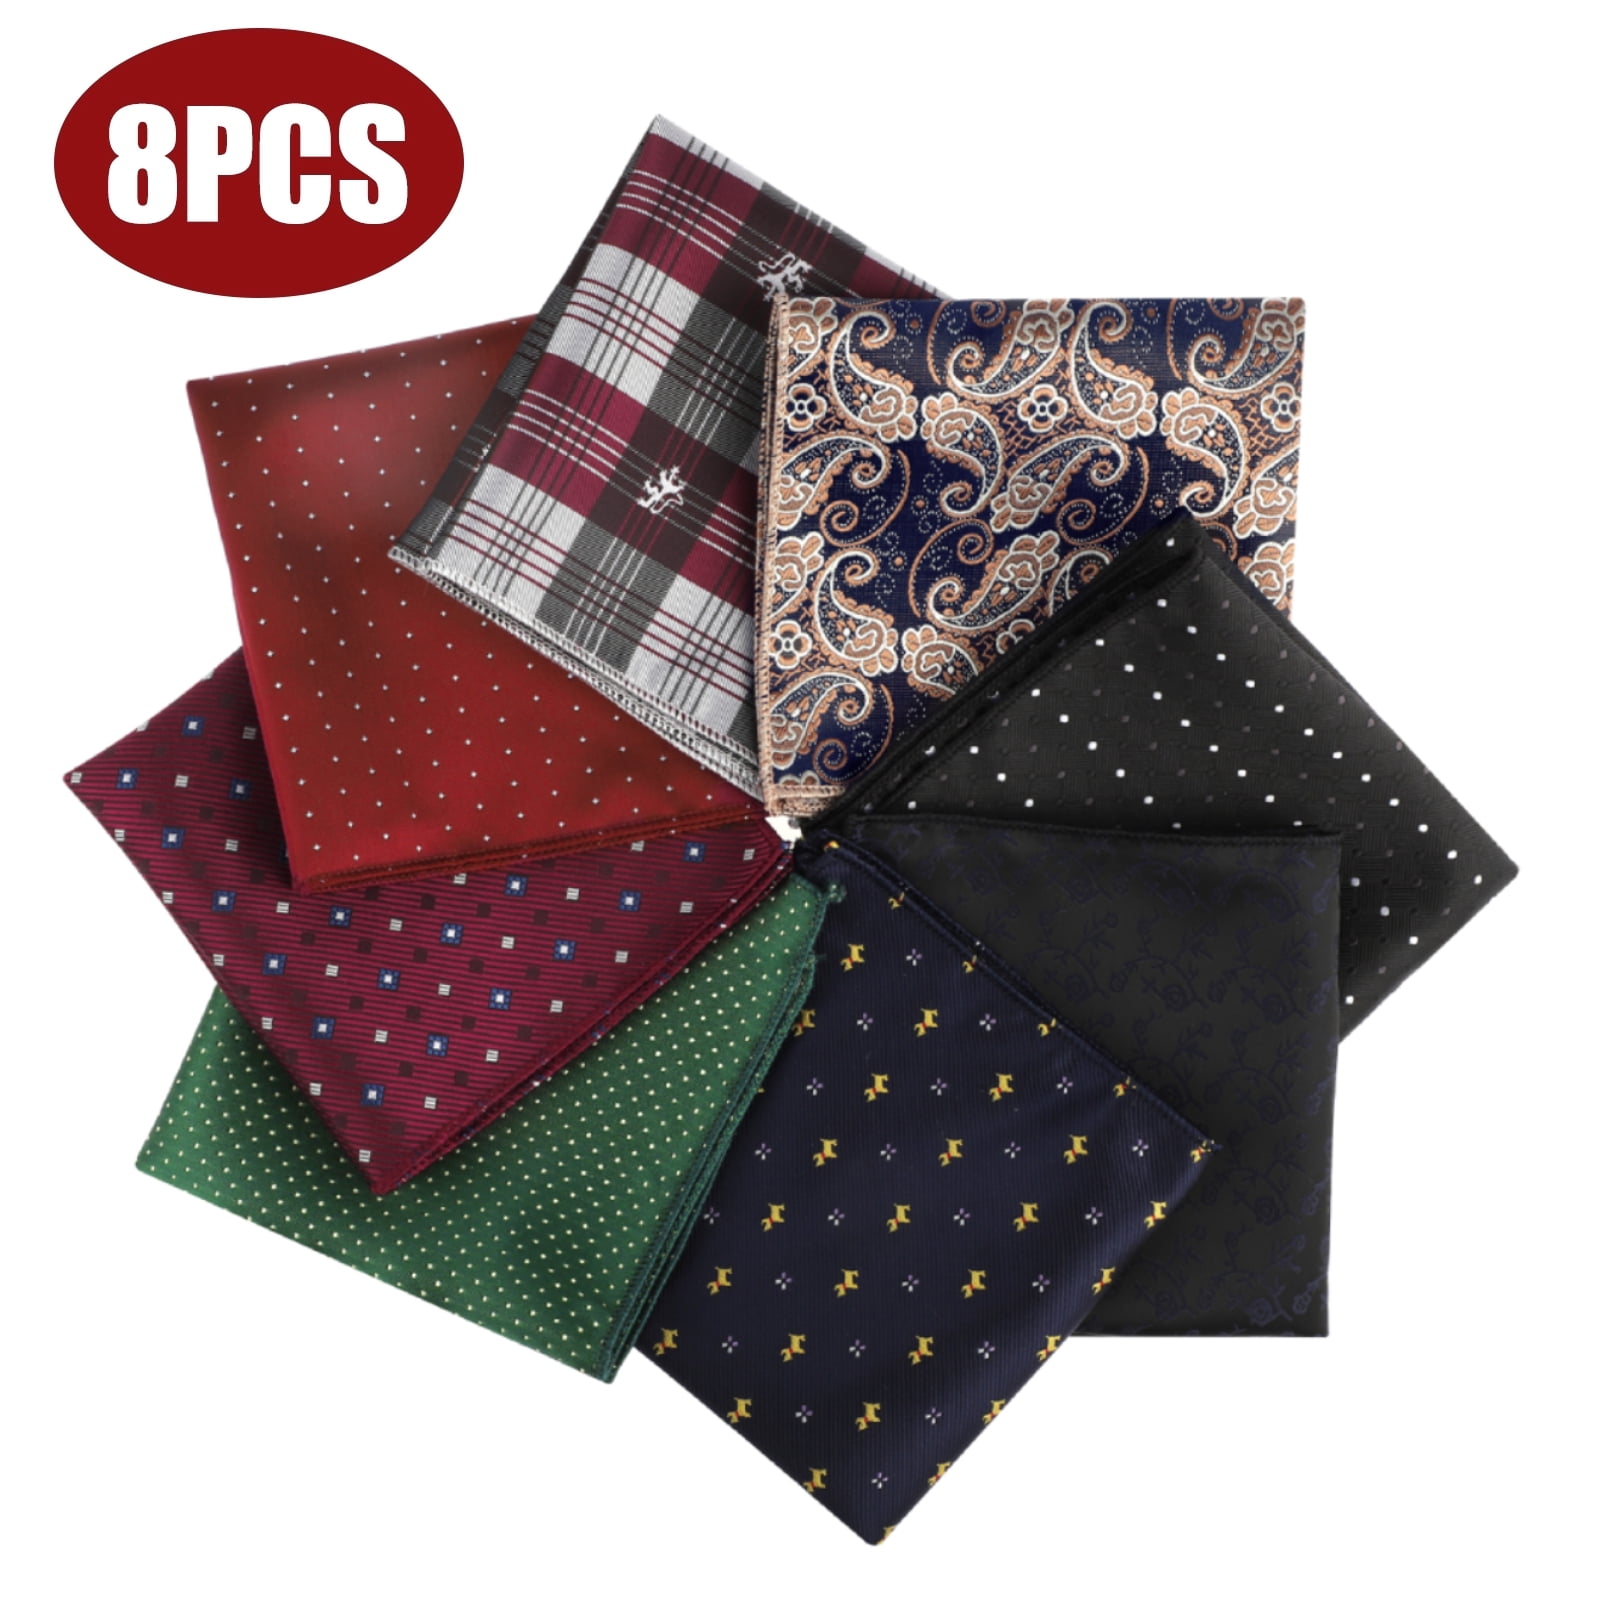 Fitstyle 4 PCS Soft Cotton Pocket Square Handkerchief For Men Wedding Party